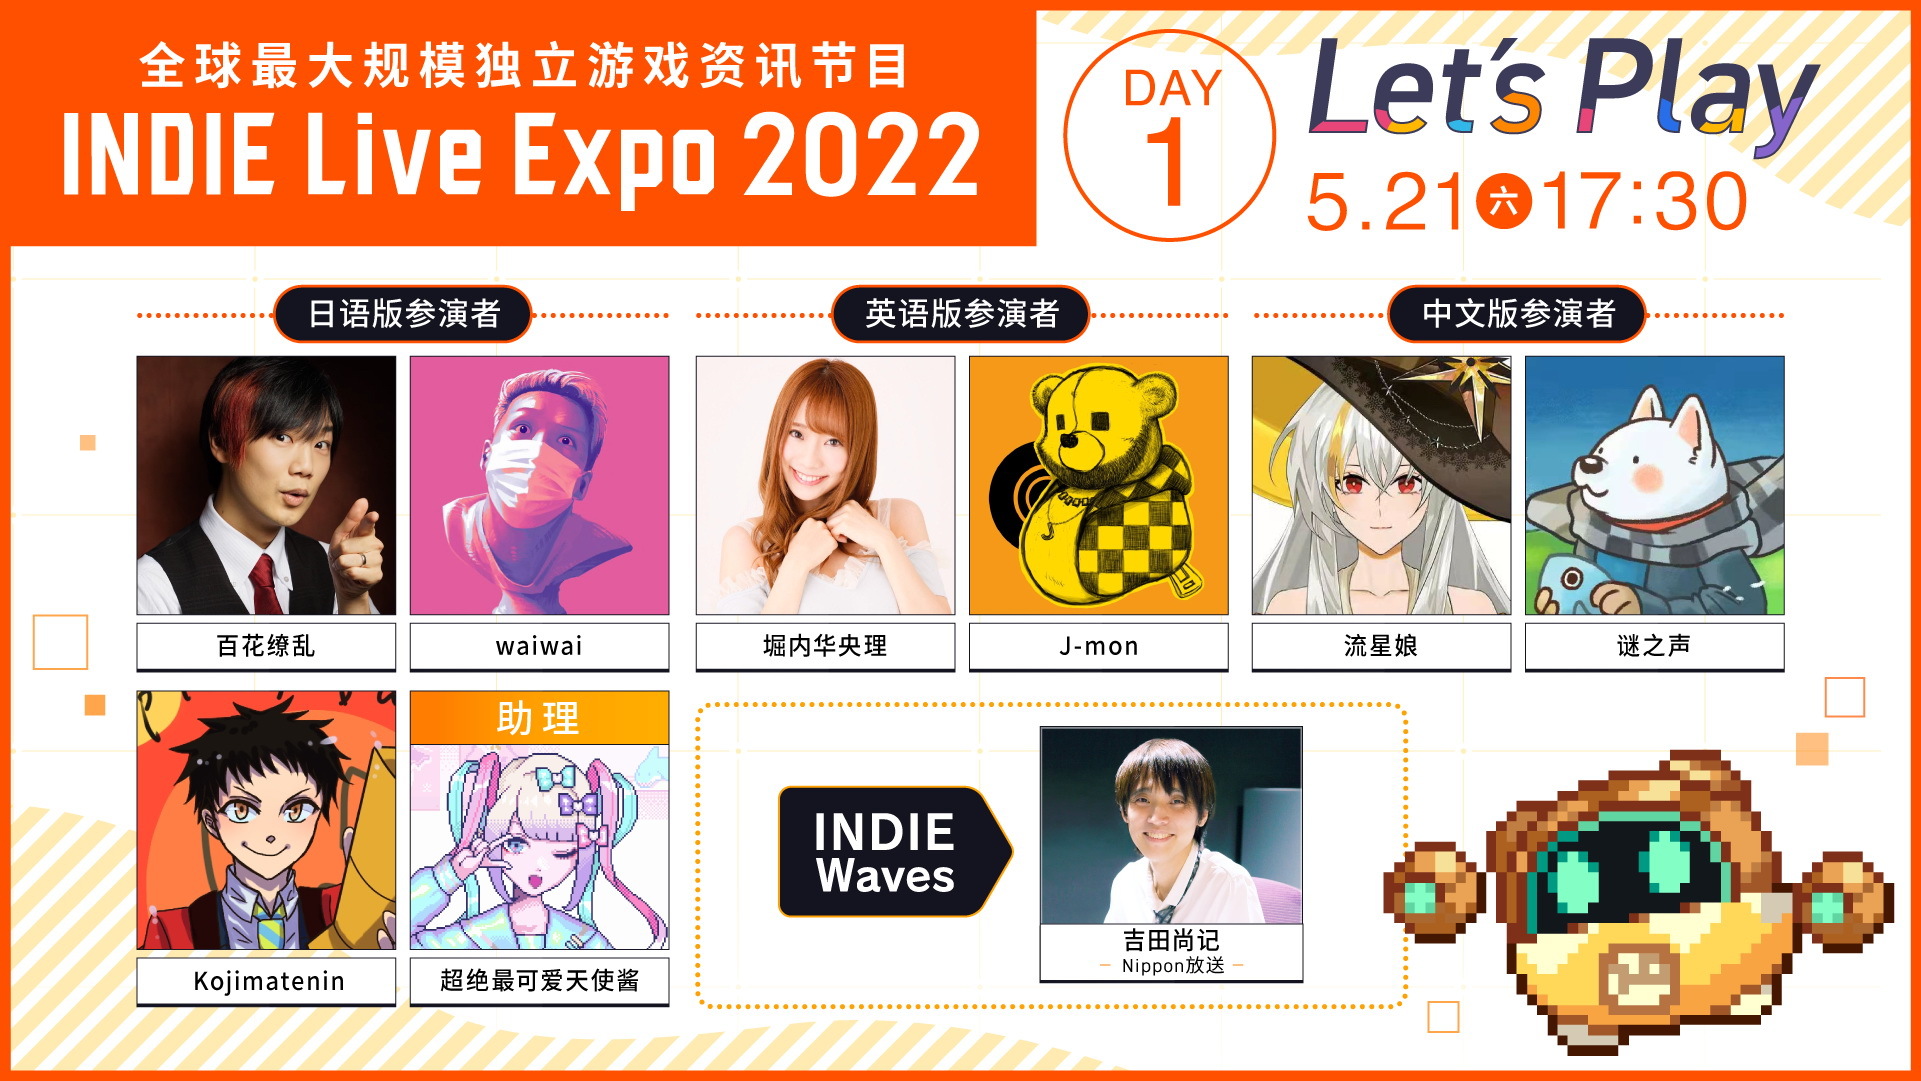 圖https://p2.bahamut.com.tw/B/2KU/68/82b4e6c354a51cc11db92381551gdxk5.JPG, 獨立遊戲線上節目INDIE Live Expo 2022 本週末登場